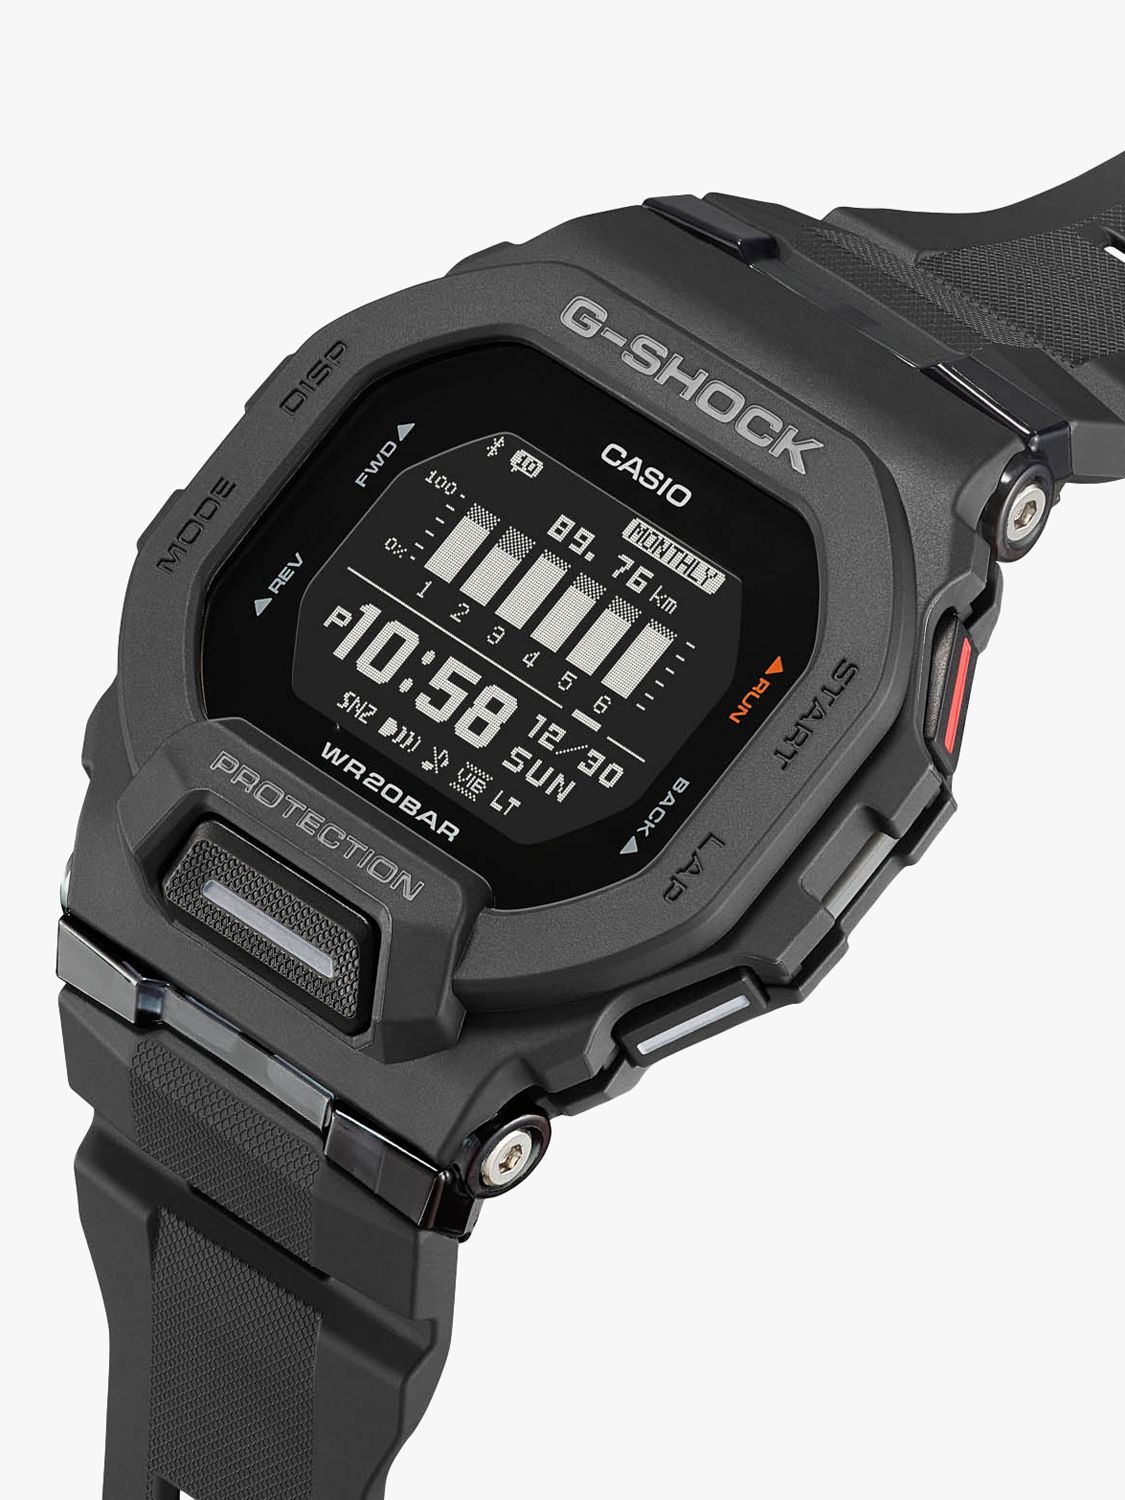 Casio Men's G-Shock Steptracker Resin Strap Watch, Black GBD-200-1ER